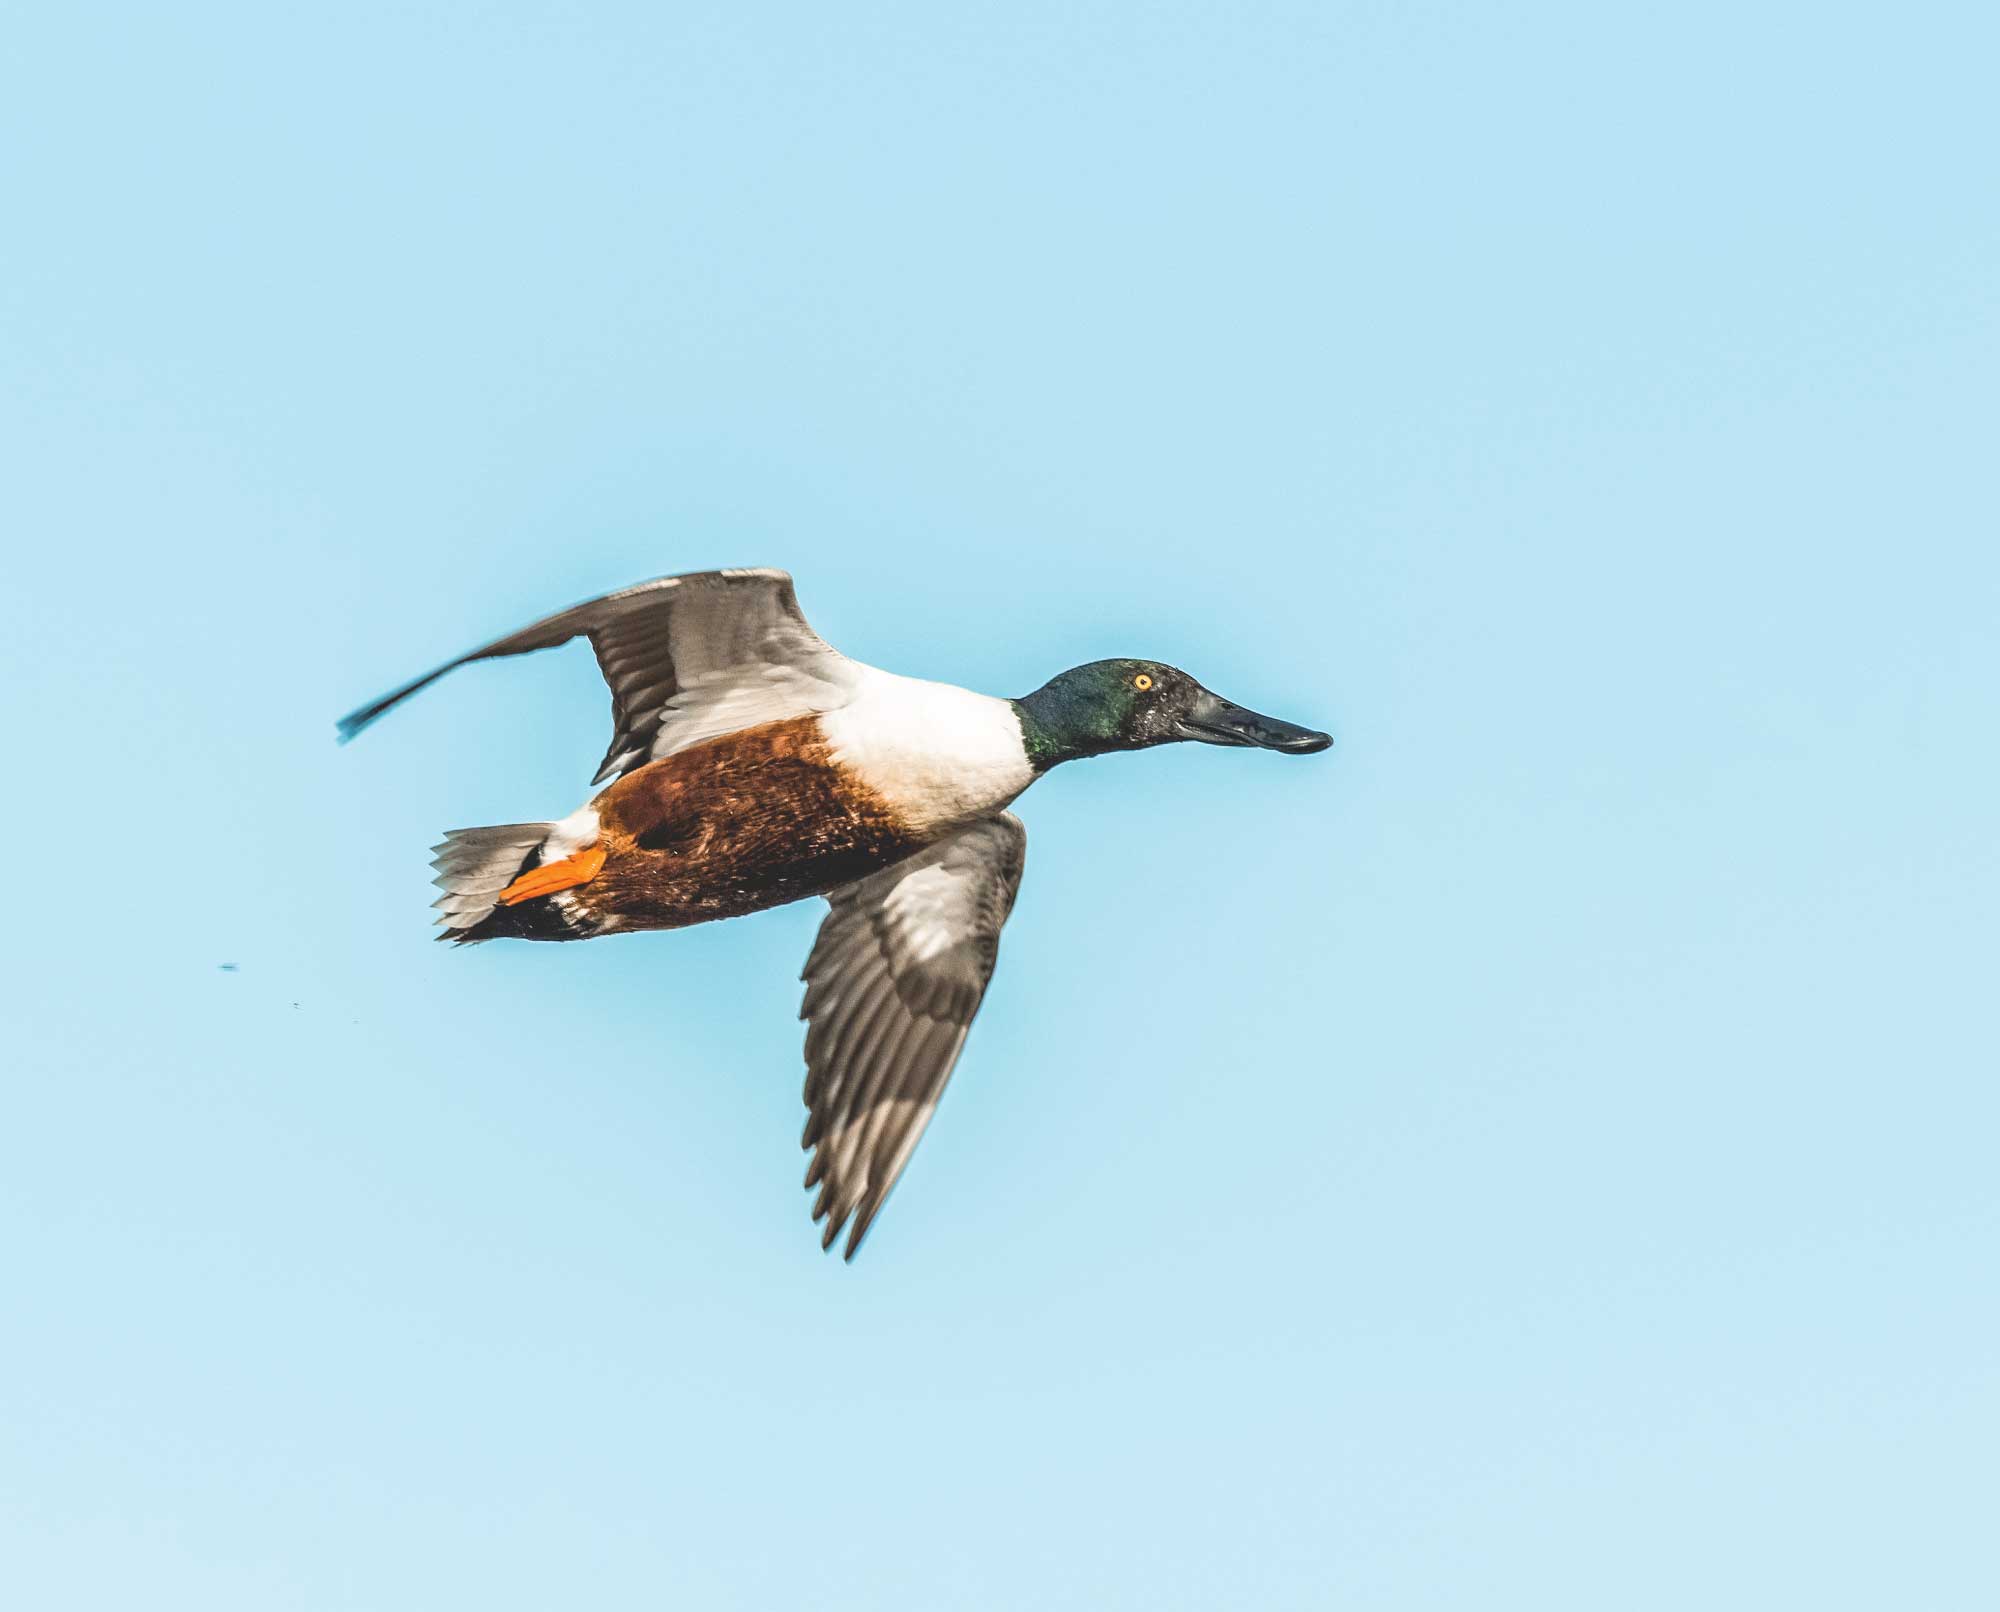 A male Northern Shoveler flies against a blue sky